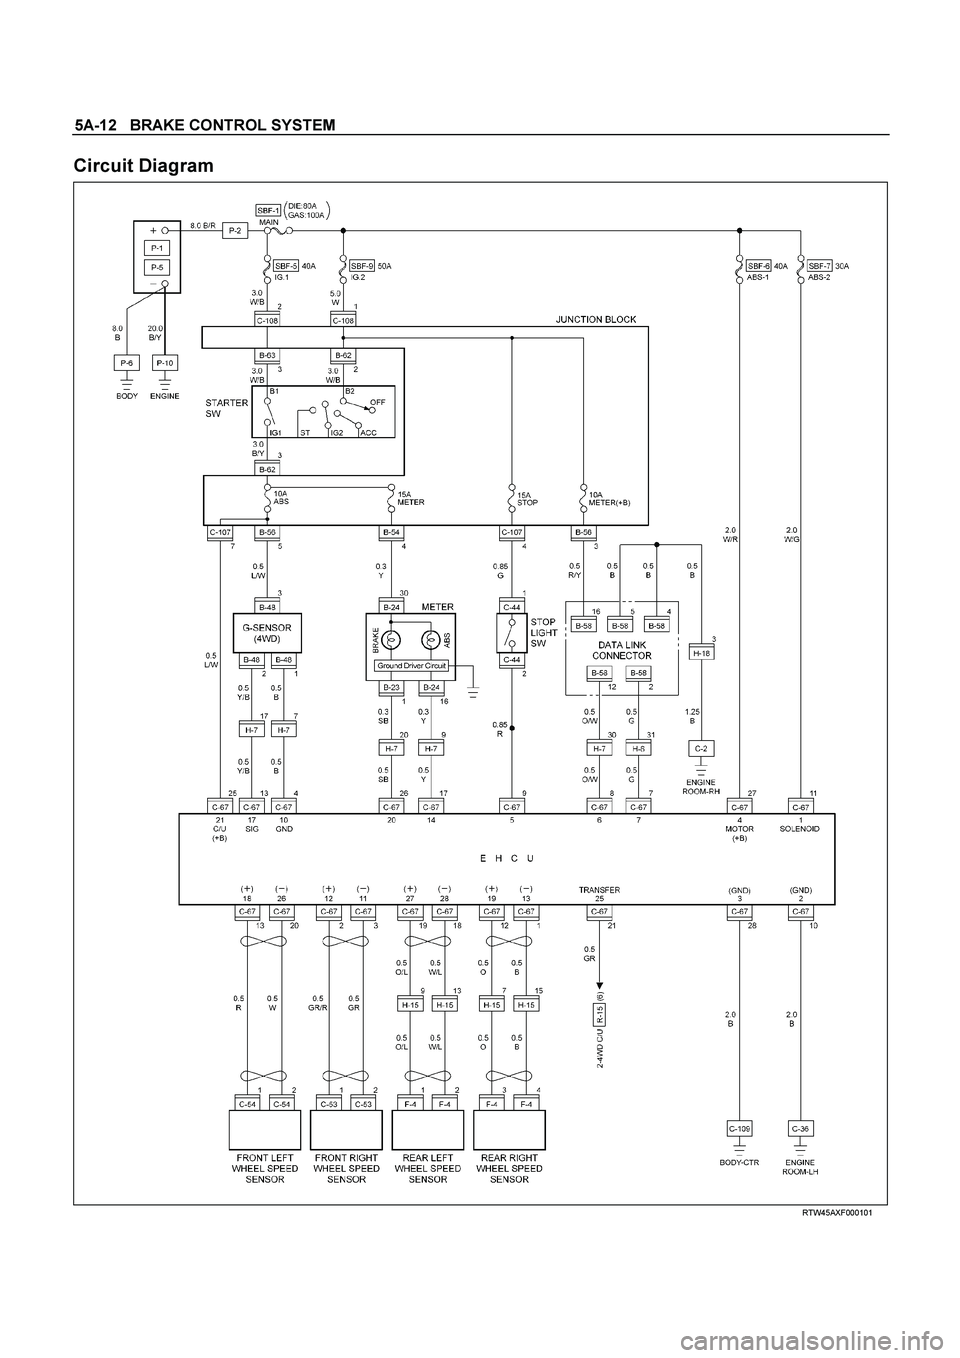 ISUZU TF SERIES 2004  Workshop Manual 5A-12   BRAKE CONTROL SYSTEM
 
Circuit Diagram 
  
 
 RTW45AXF000101  